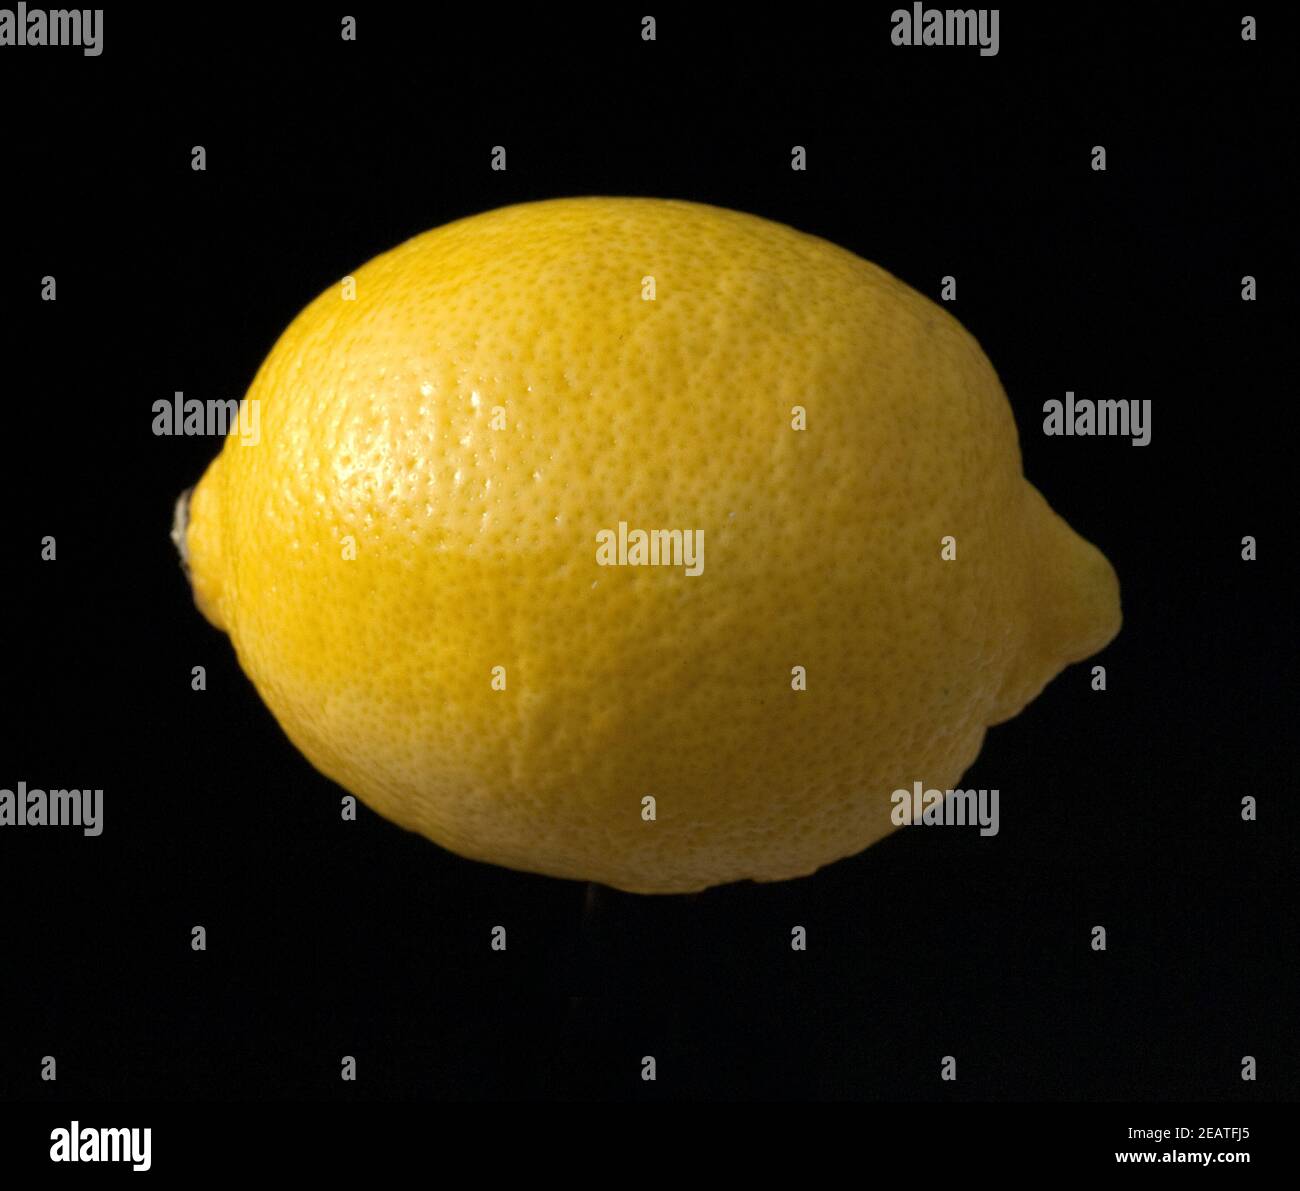 Zitrone, Citrus, limone Foto Stock